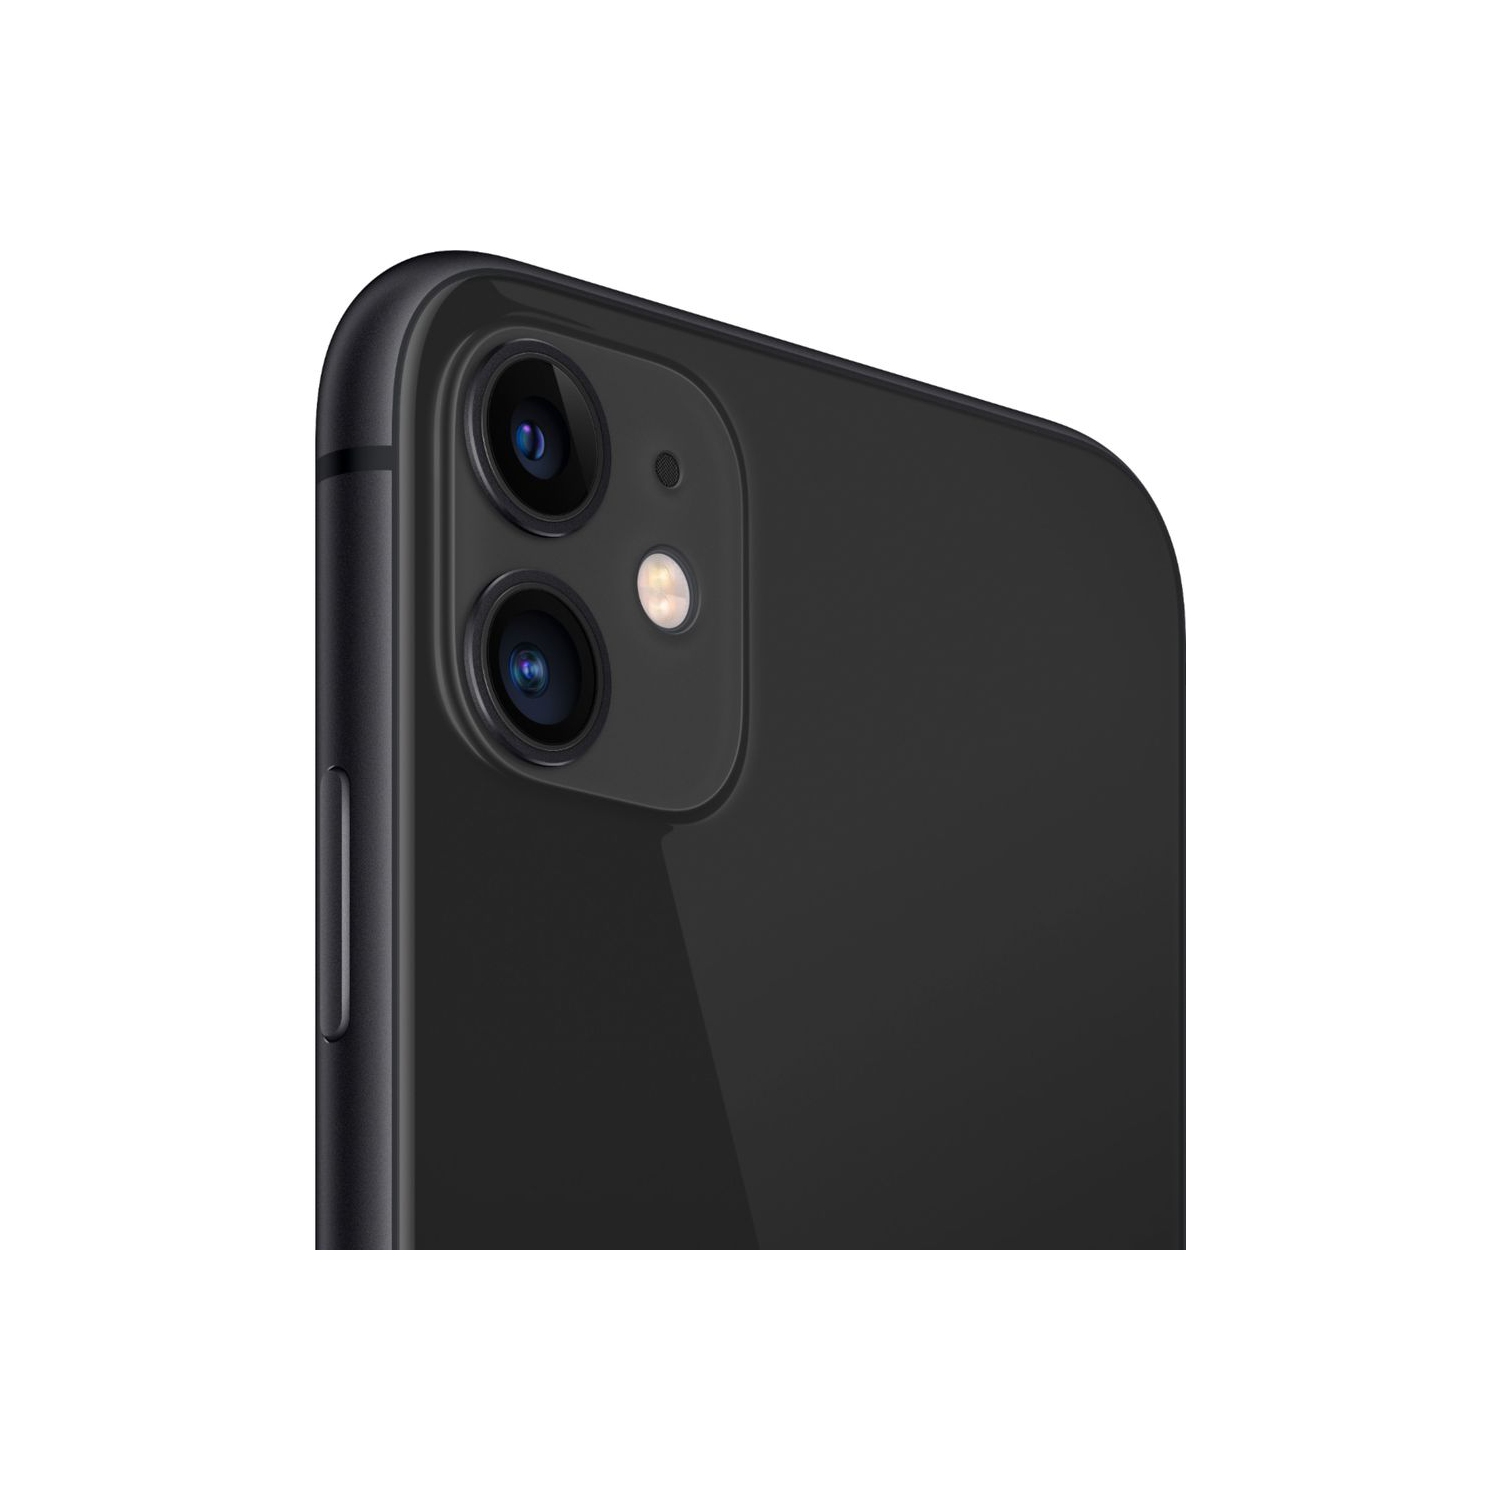 Apple iPhone 11 64GB Smartphone - Black - Unlocked - New Sealed